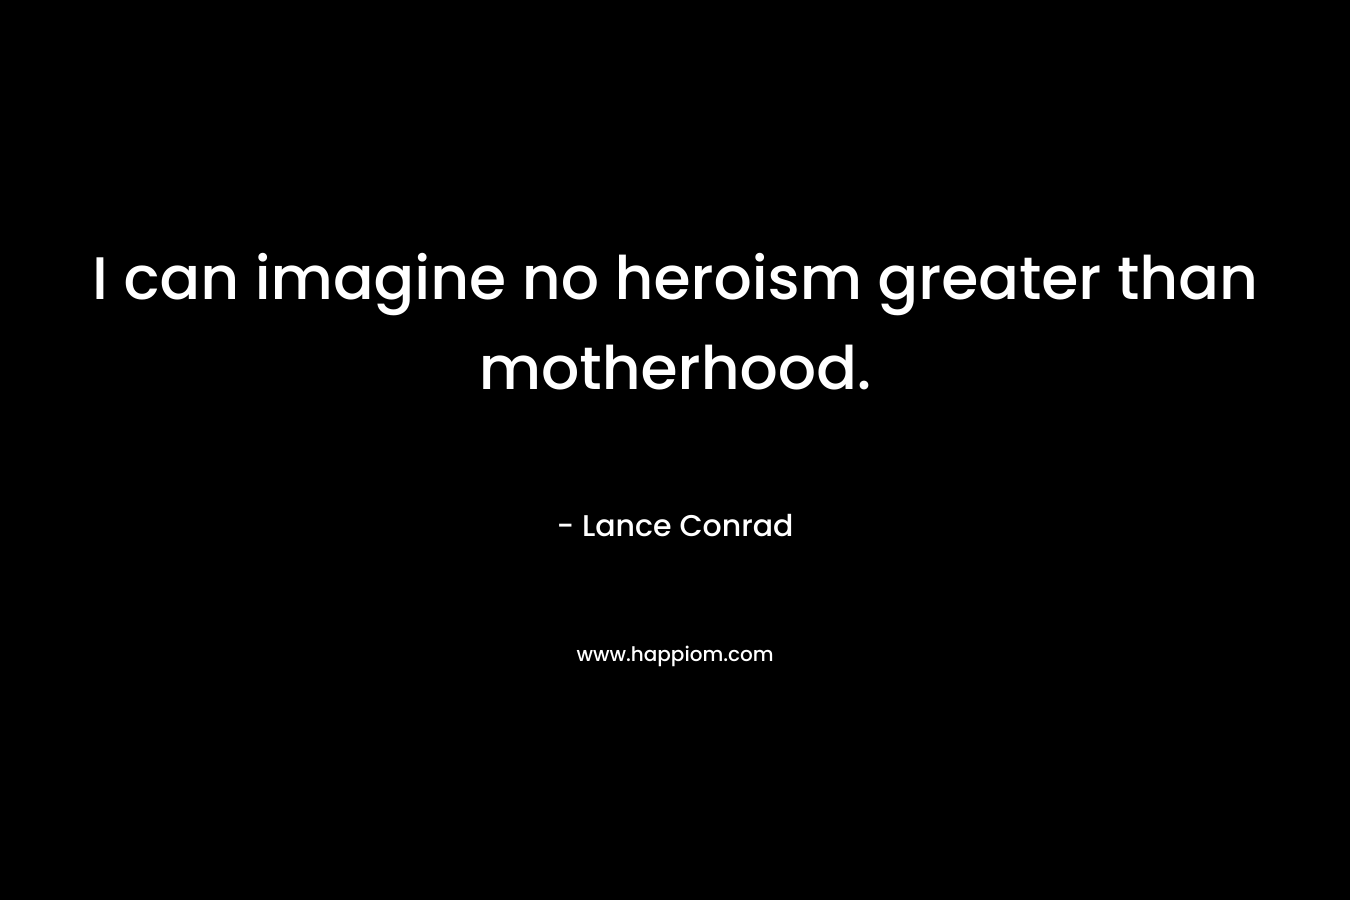 I can imagine no heroism greater than motherhood.